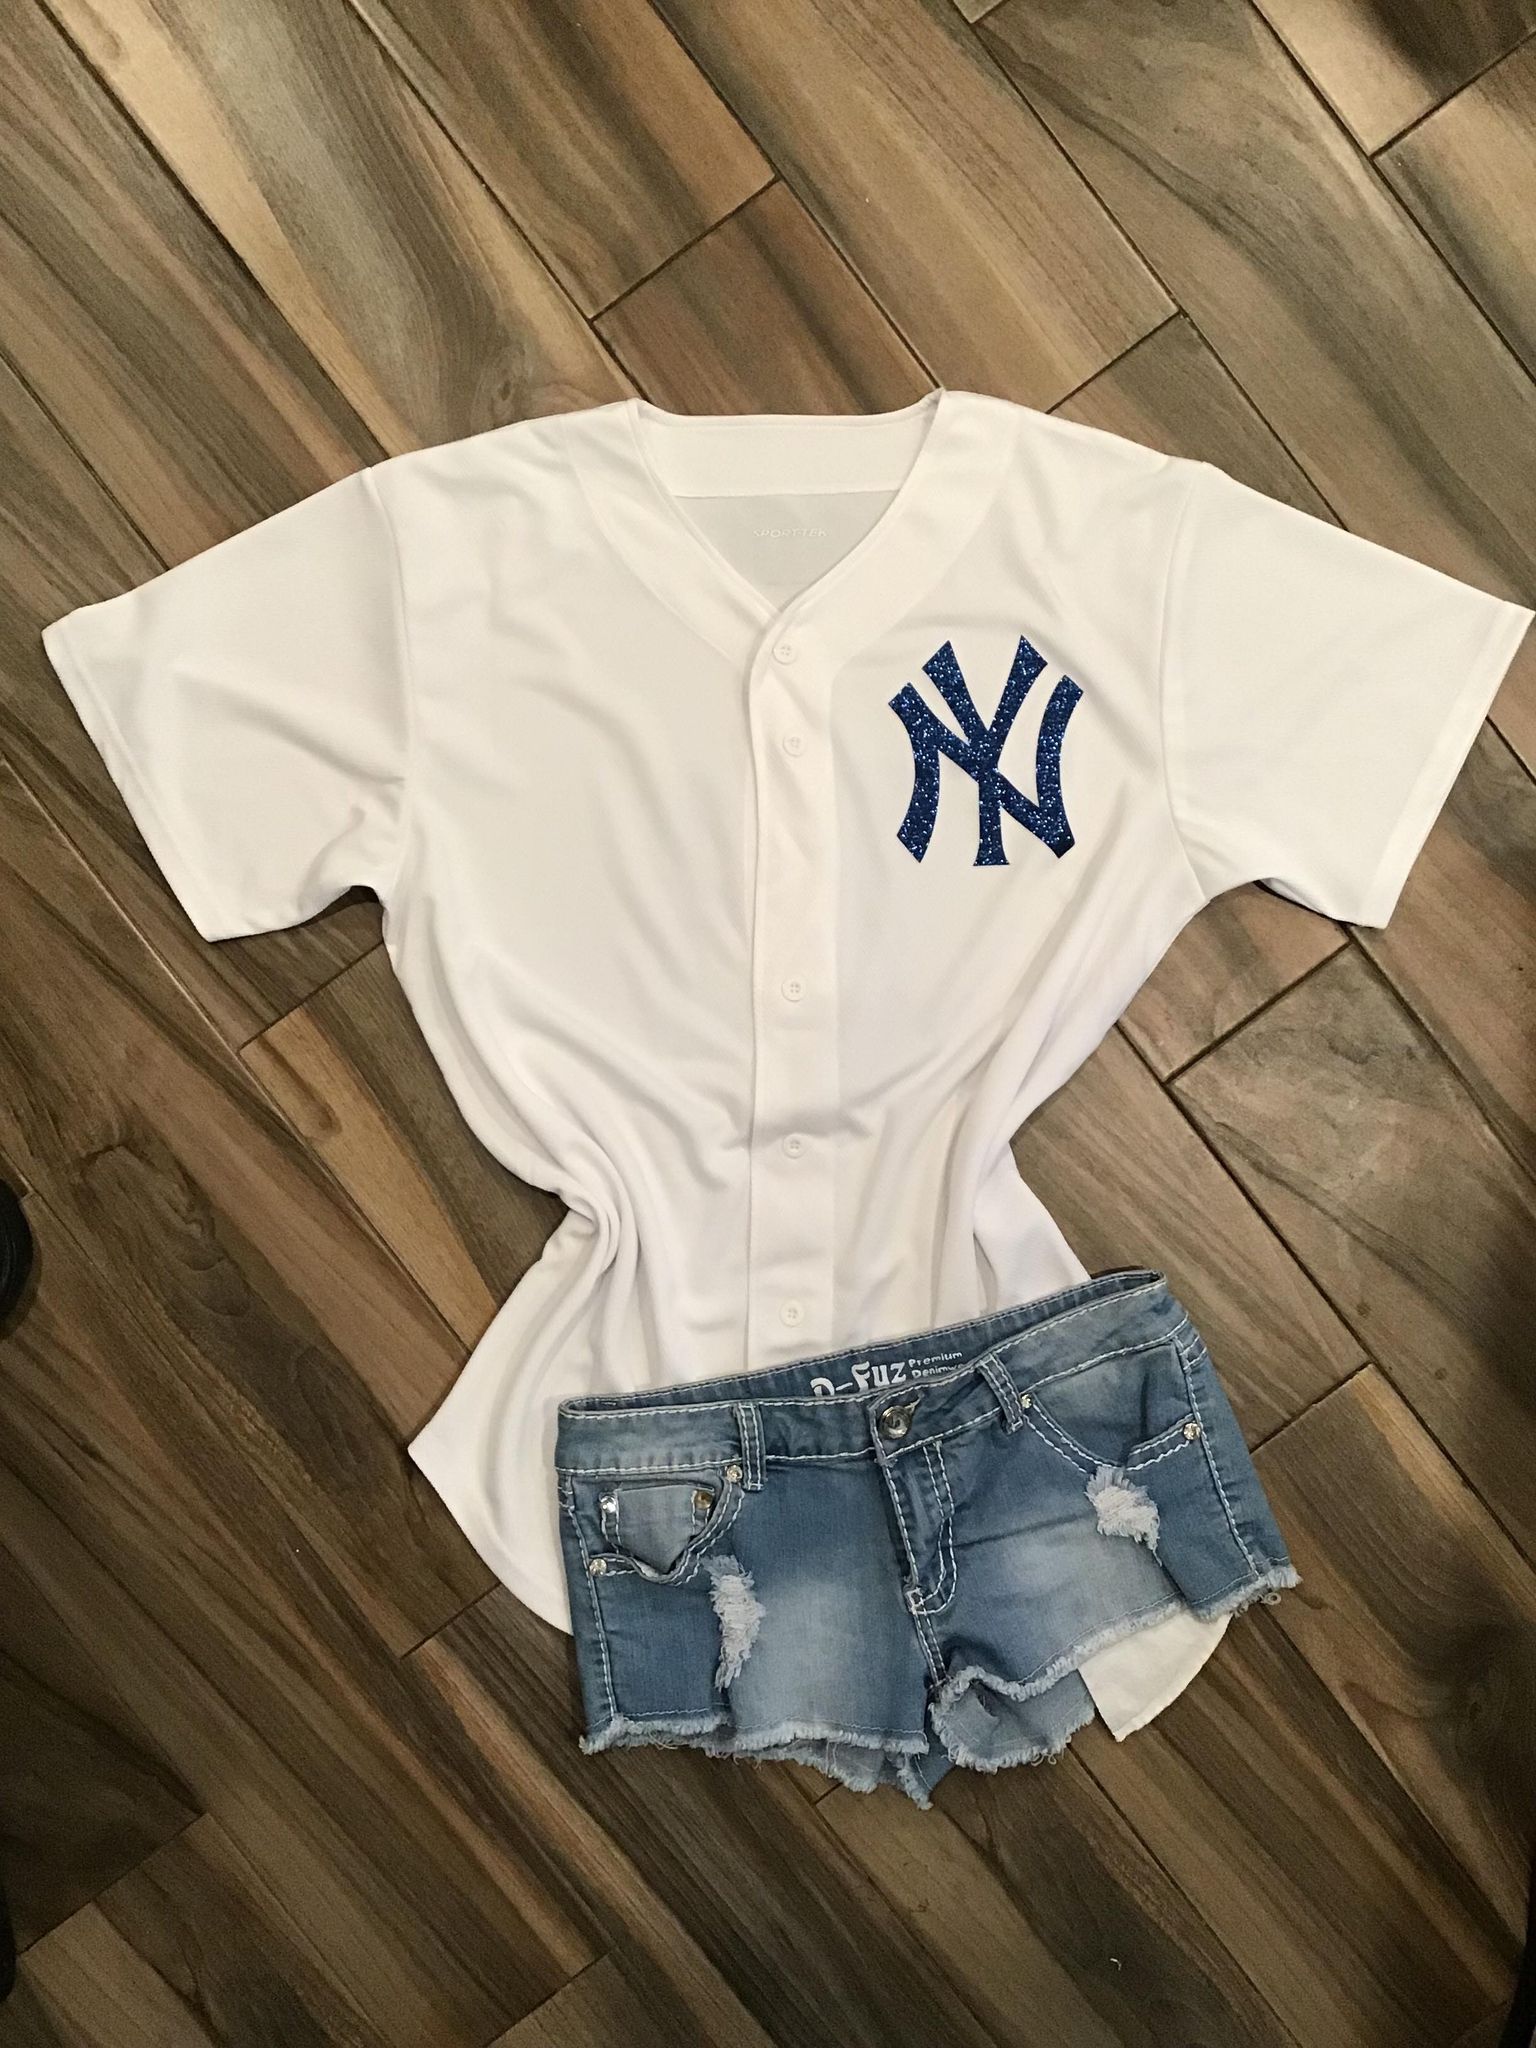 Lulu Grace Designs Navy New York Yankees Inspired Baseball Top: Baseball Fan Gear & Apparel for Women XL / Youth/Toddler Tee